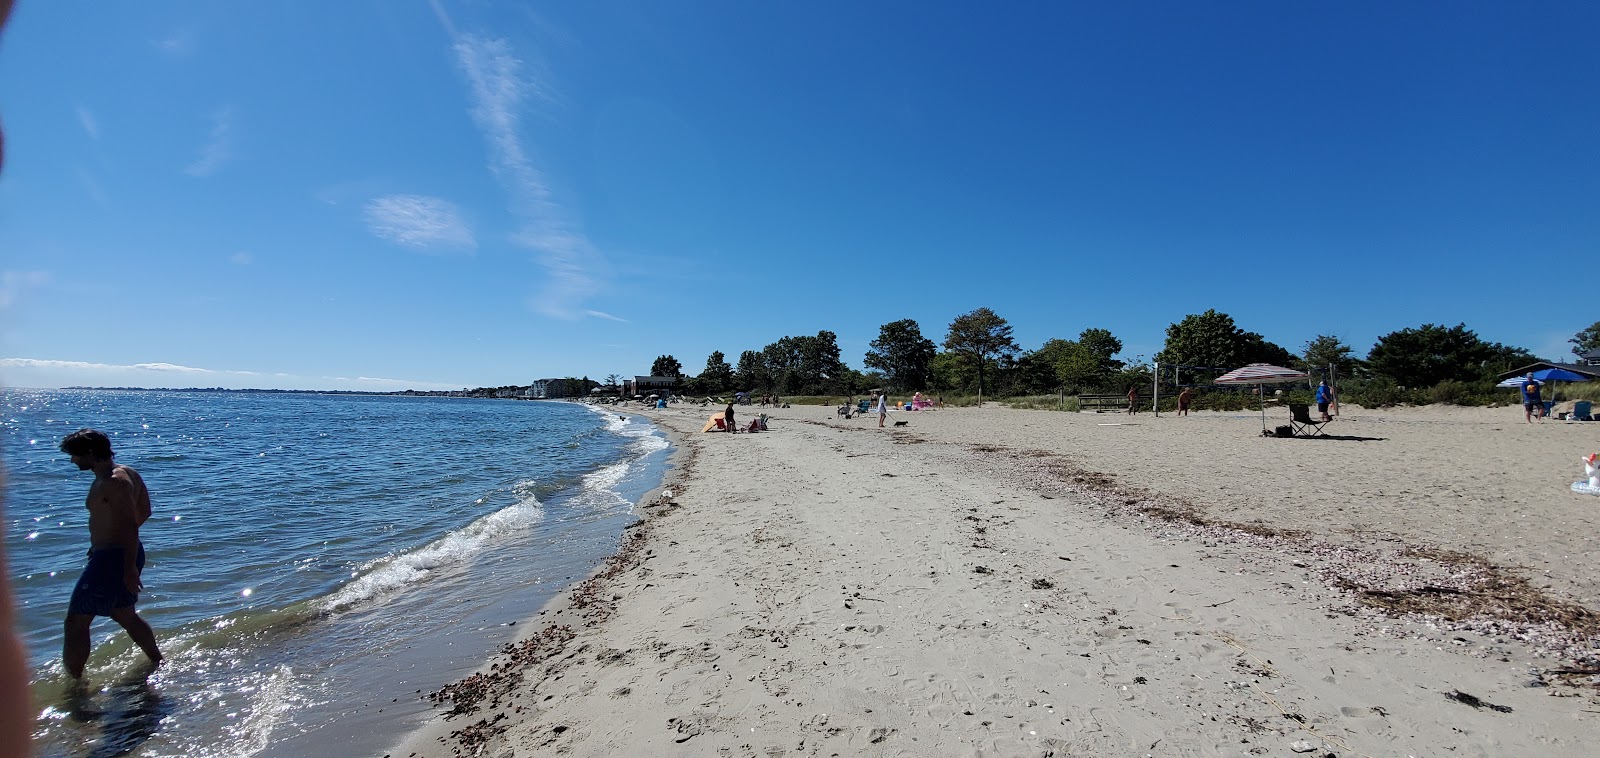 Fotografie cu Walnut Beach cu nivelul de curățenie in medie